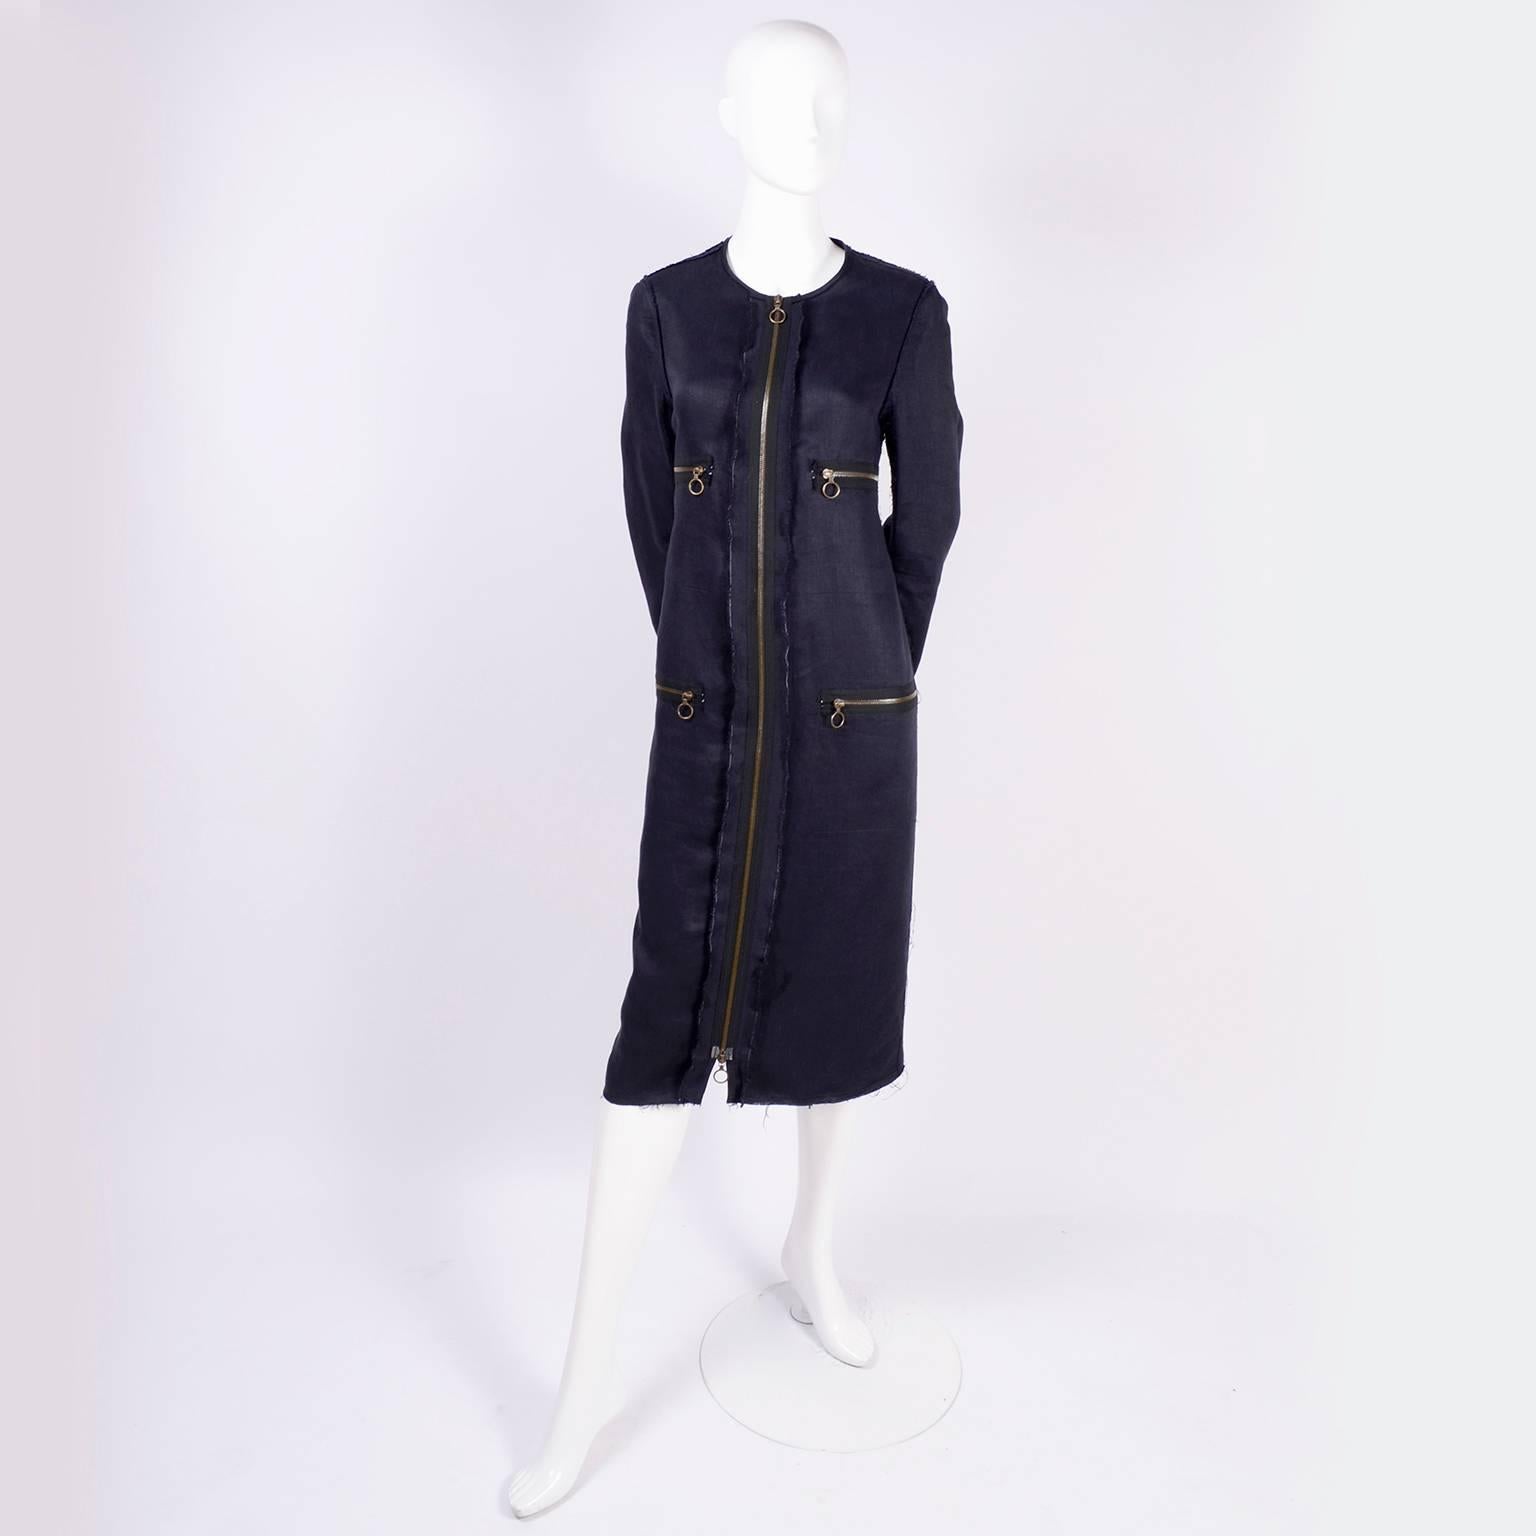 Lanvin Dress or Coat in Indigo Blue Linen w/ Exposed Seams & Raw Hem Alber Elbaz 5